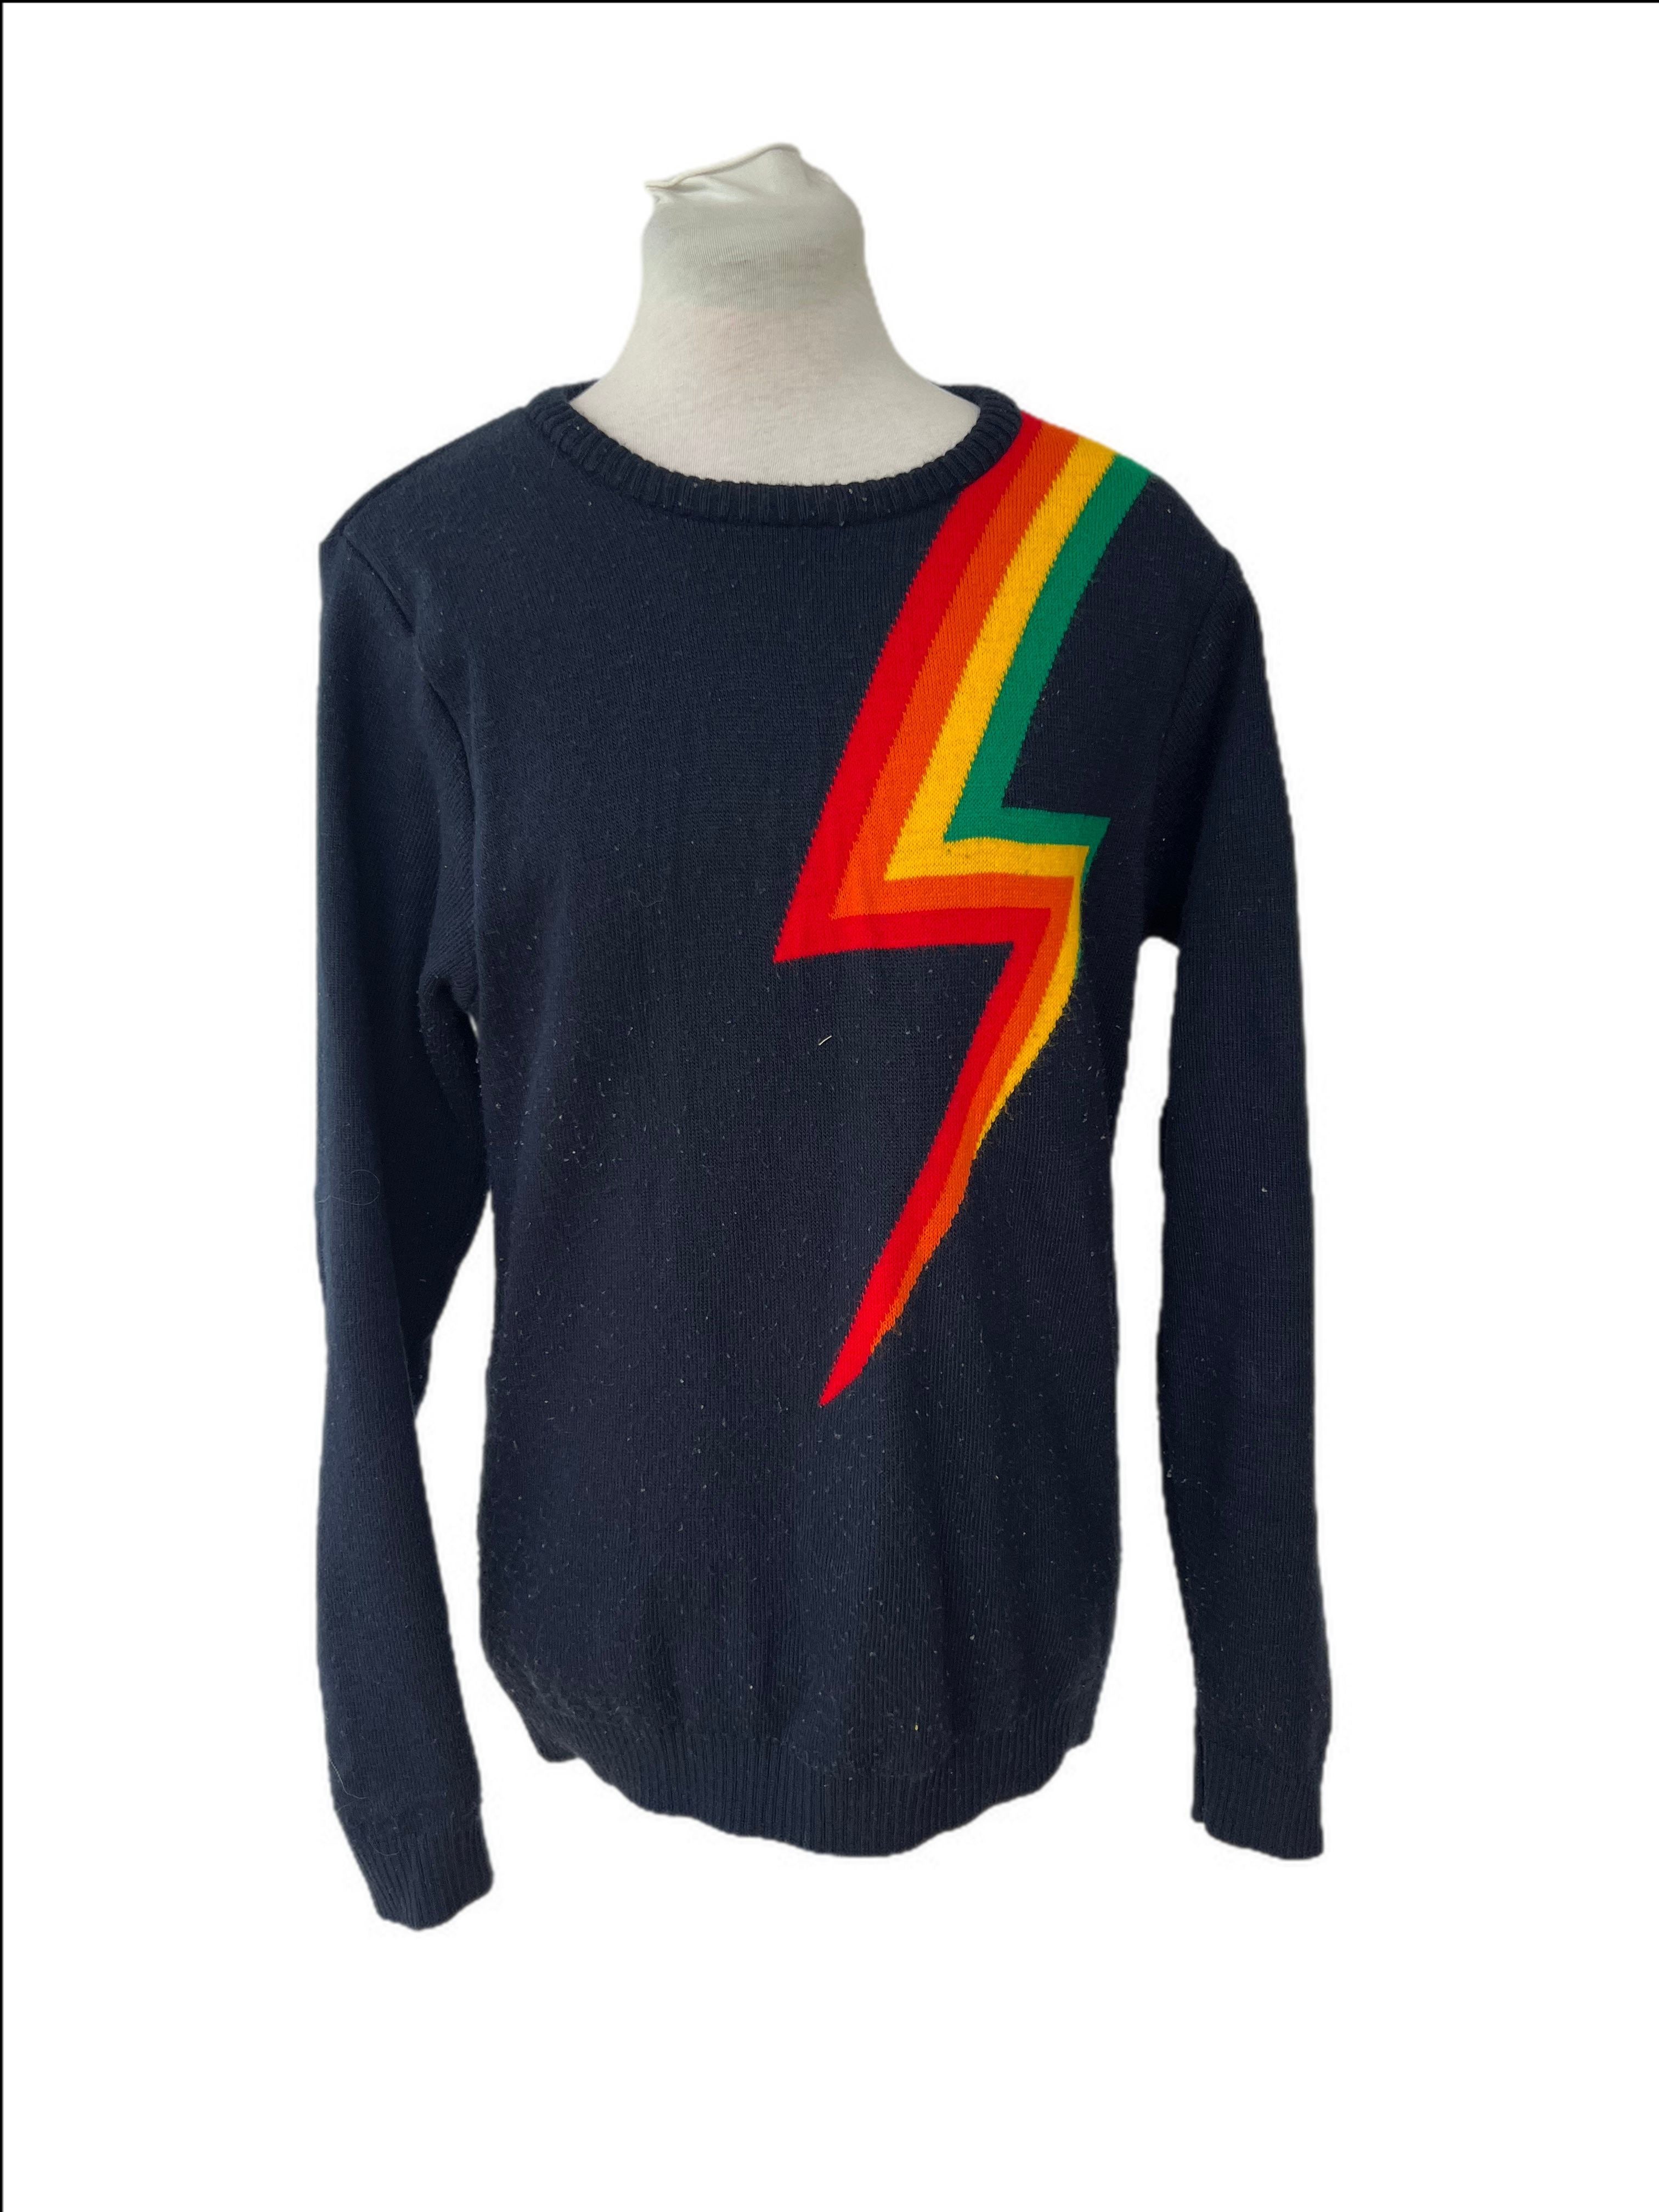 Navy Jumper/Sweater with Rainbow Lightning Bolt, pilling